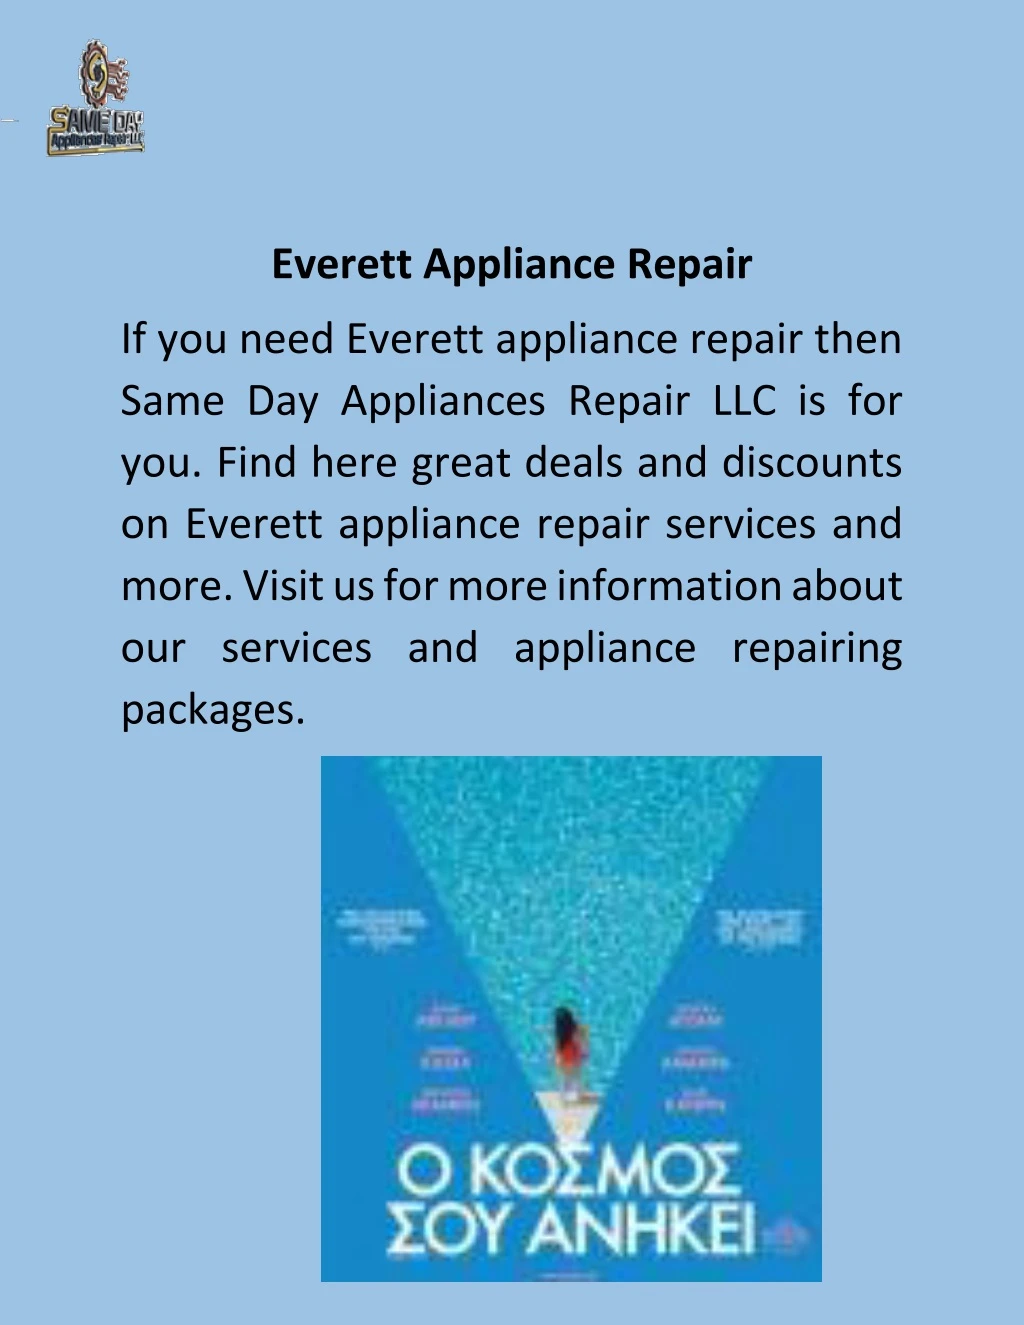 everett appliance repair